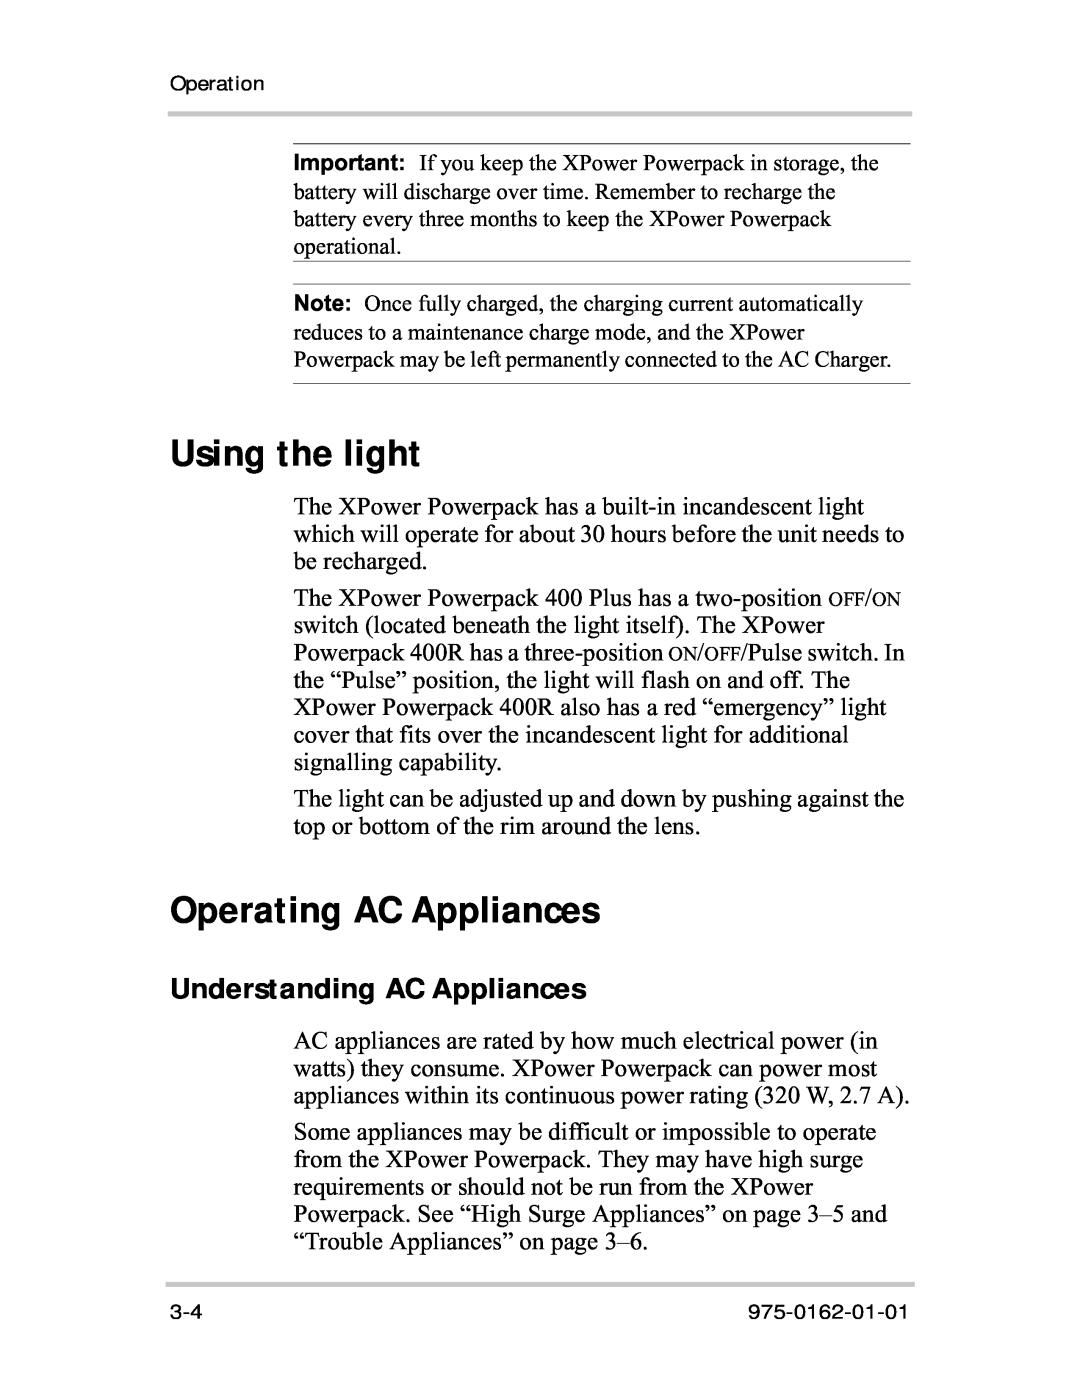 Xantrex Technology 400R manual Using the light, Operating AC Appliances, Understanding AC Appliances 